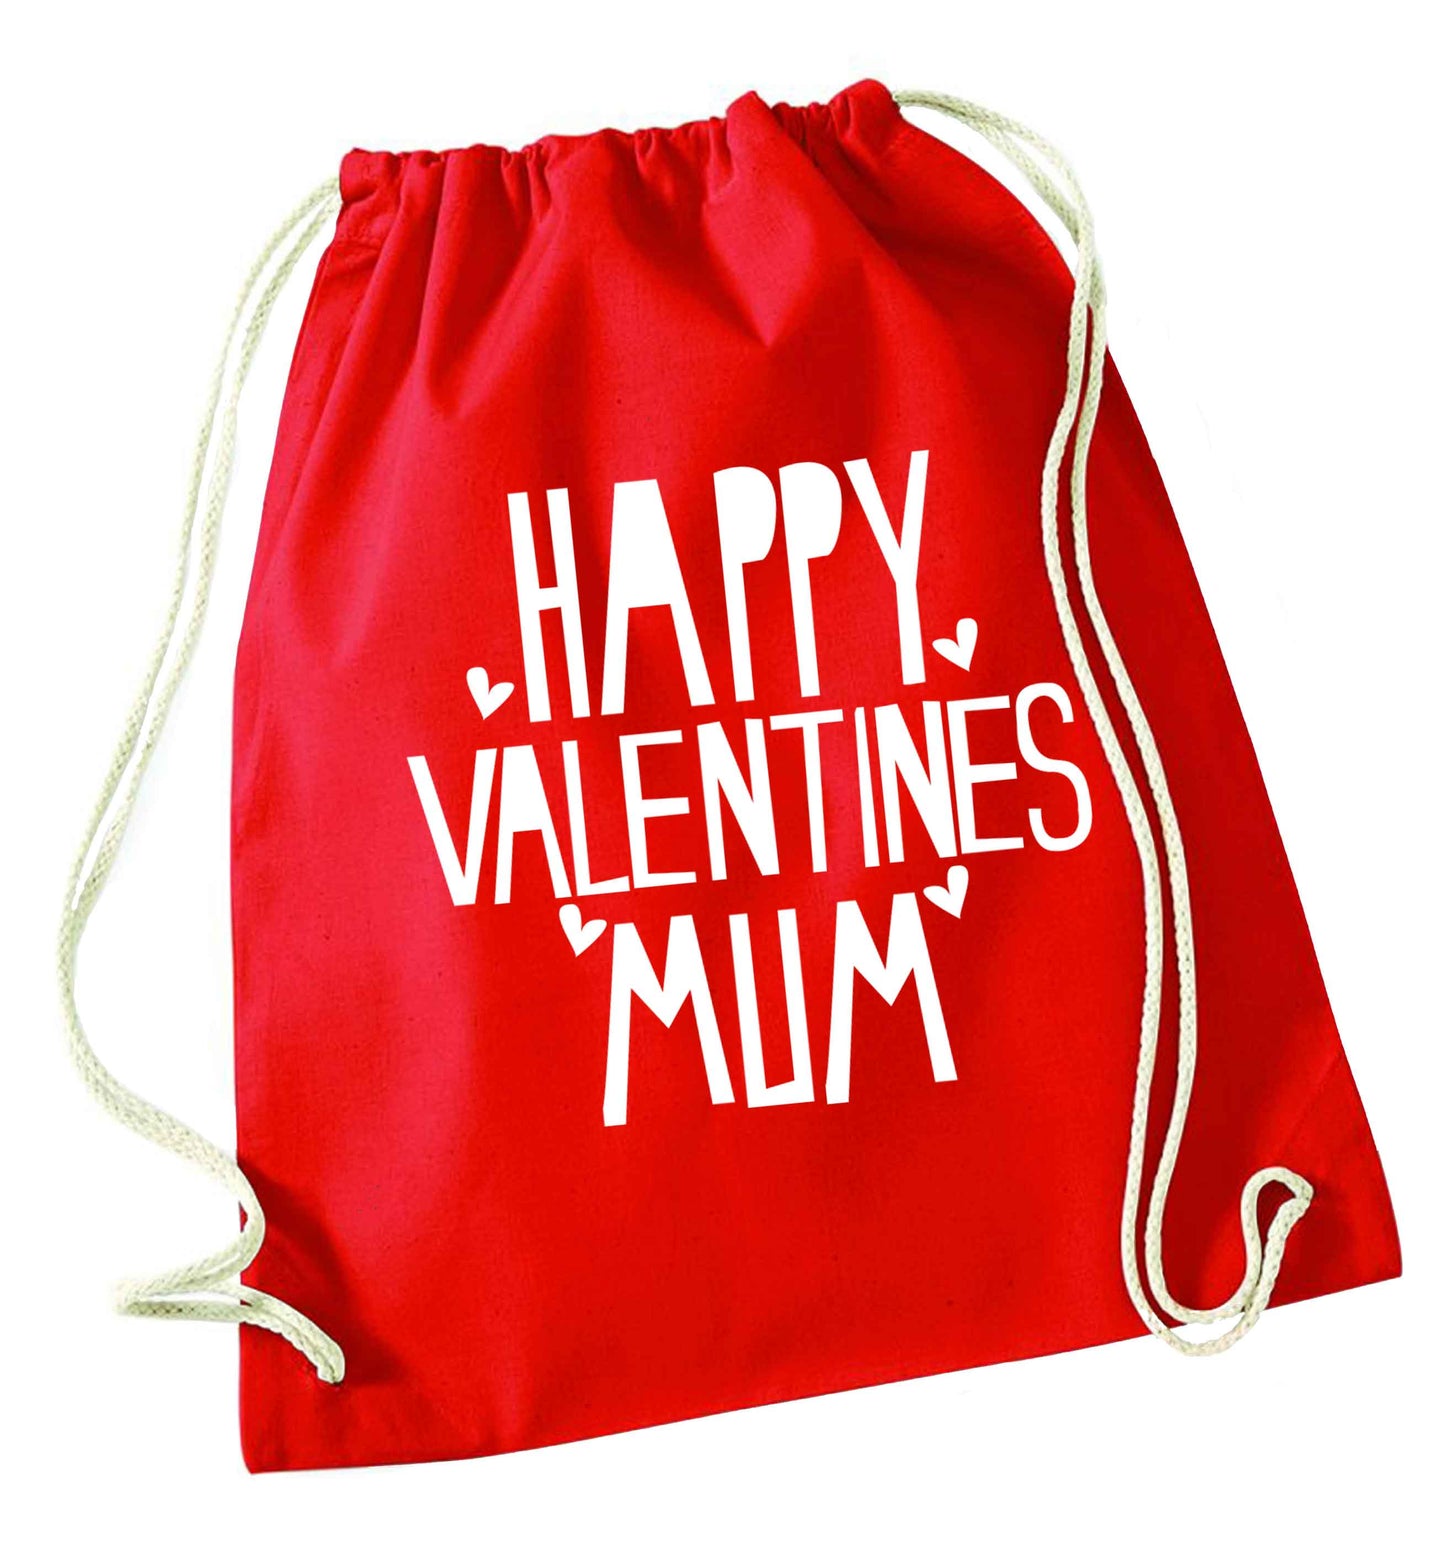 Happy valentines mum red drawstring bag 